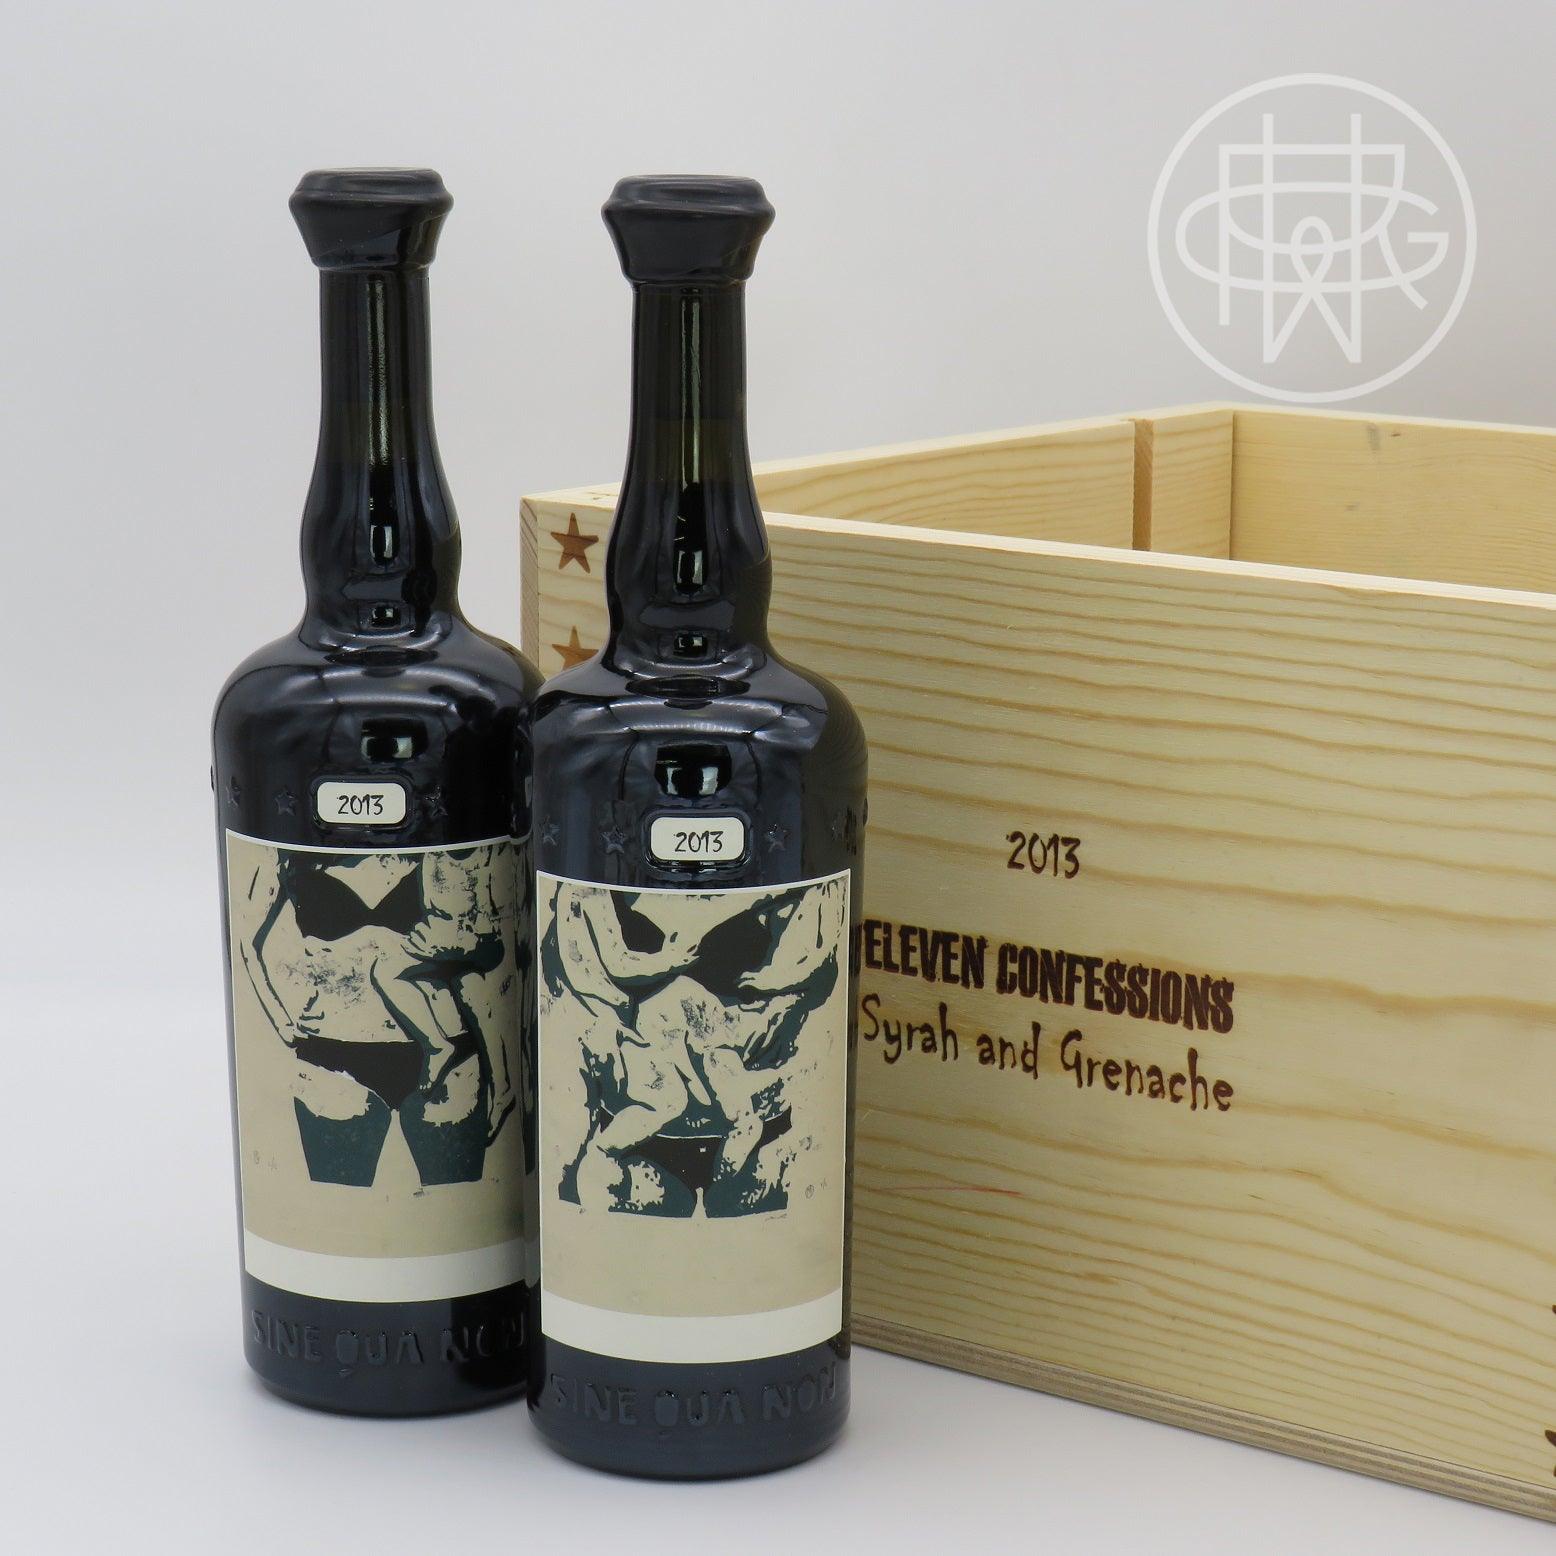 Sine Qua Non Eleven Confessions 2013 6-Pack OWC 750mL [3 Le Supplement Syrah & 3 Jusqu' A L'os Grenache] - GRW Wine Collection